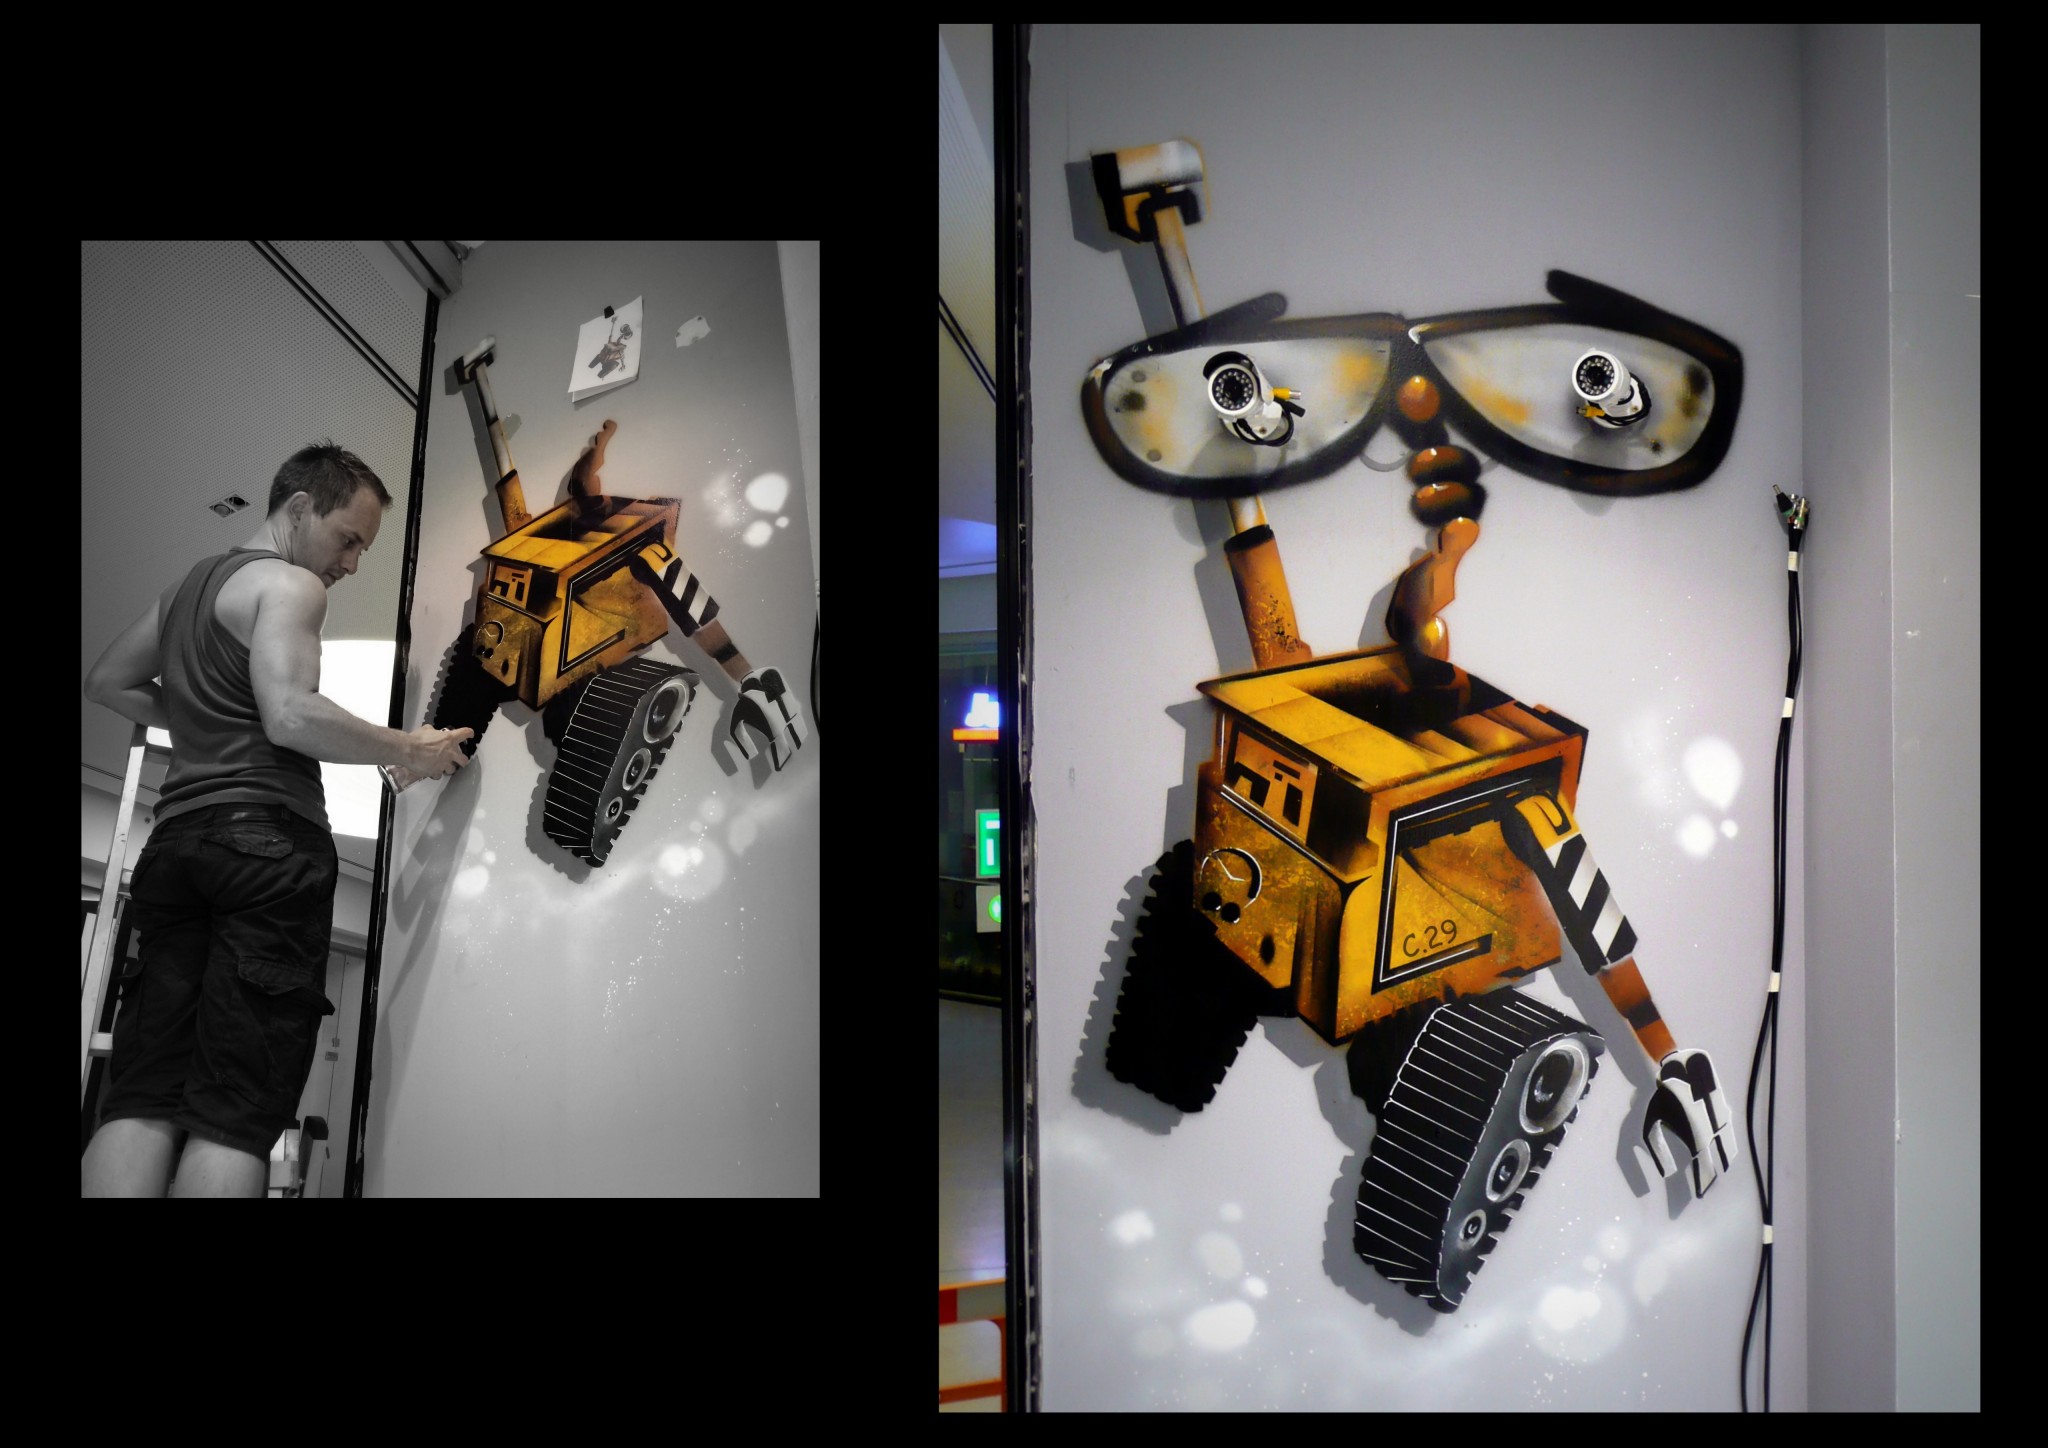 Wall-e - Magasin de jouets -2014